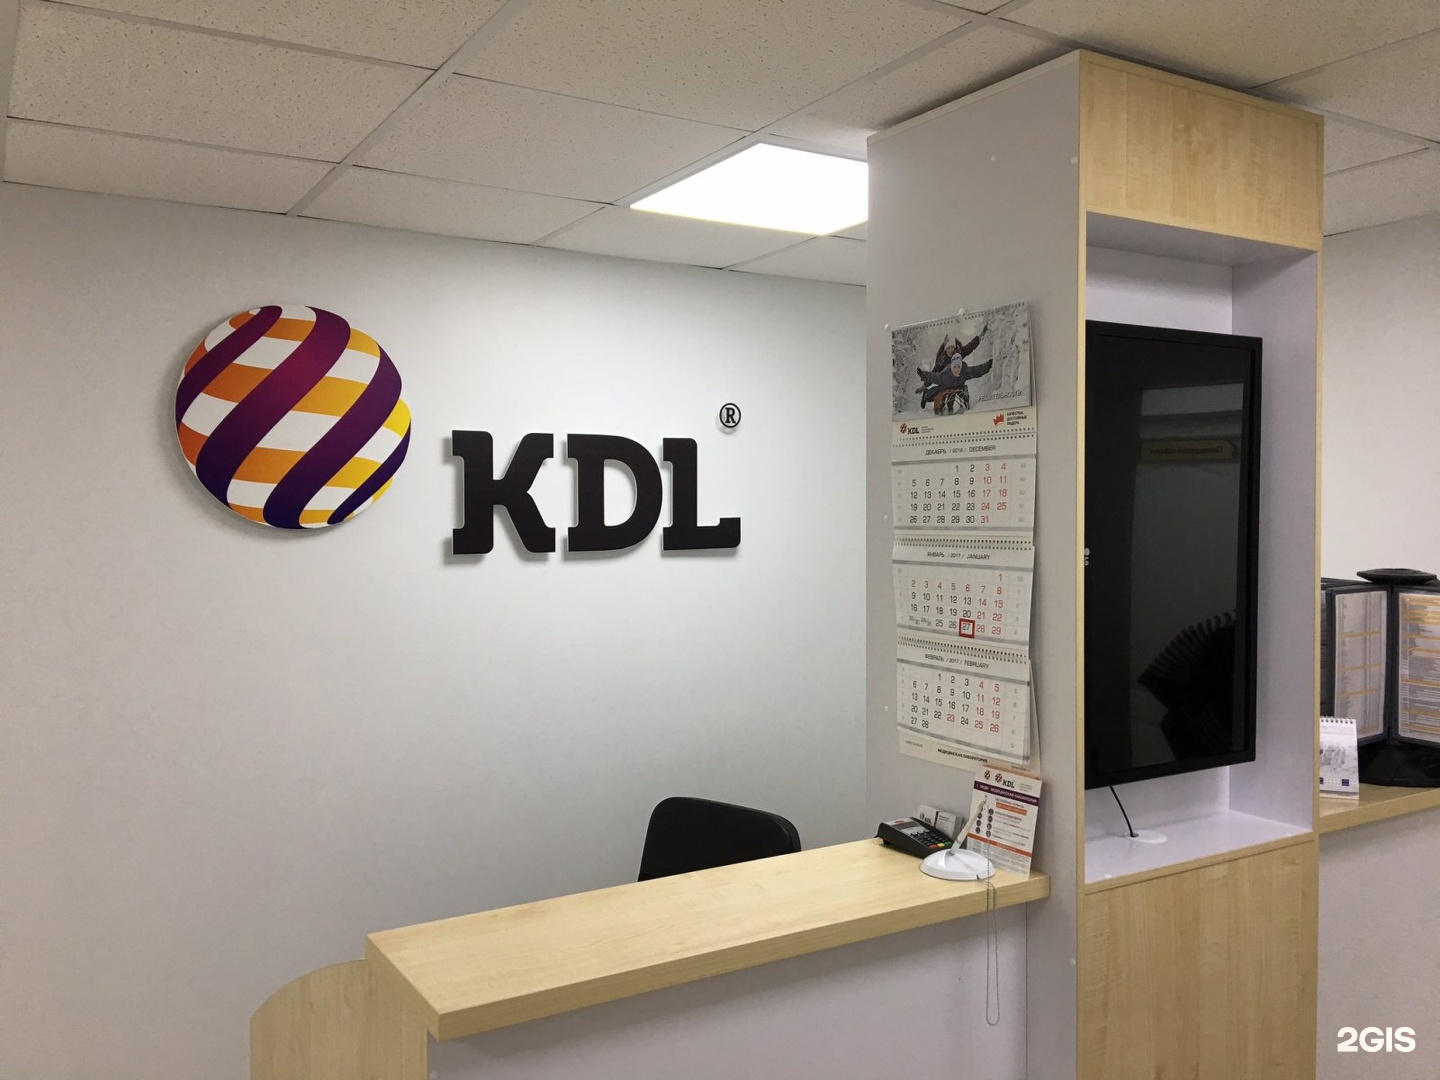 Кдл 25. КДЛ лаборатория Омск. KDL логотип. Эмблема КДЛ лаборатории. KDL В Омске.